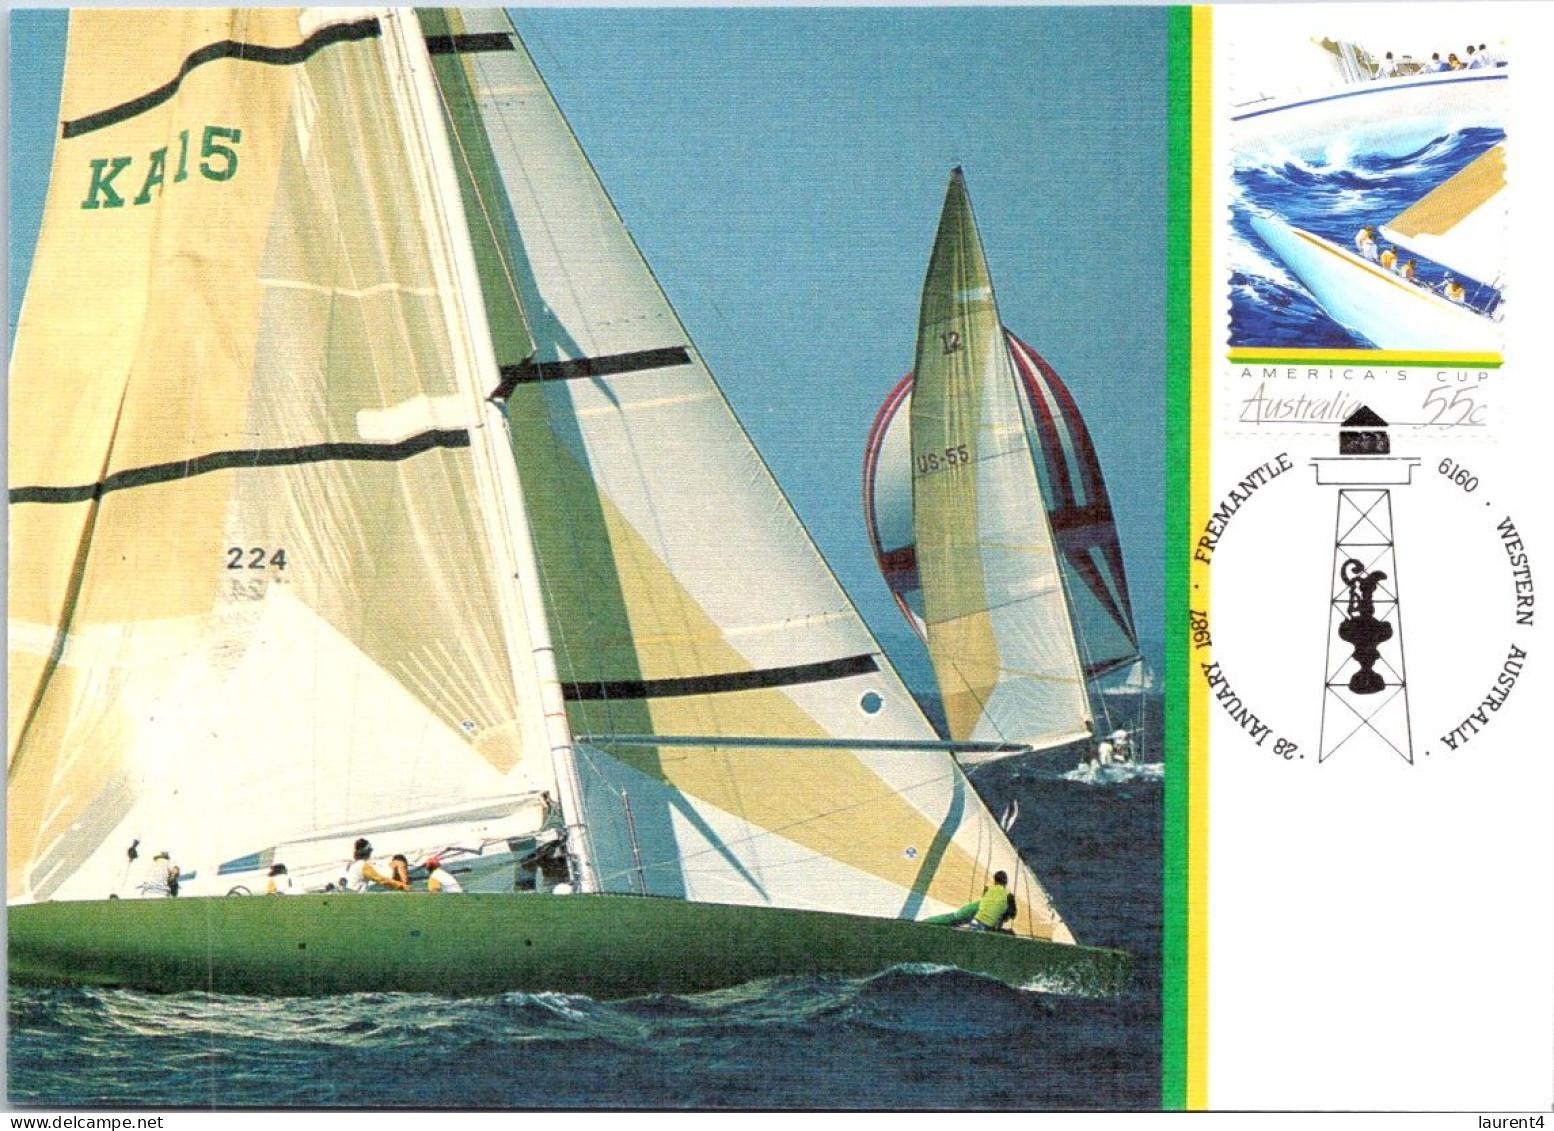 7-5-2024 (4 Z 30) Australia - America Cuo Triomph 1983 (sailing) 7 postcards